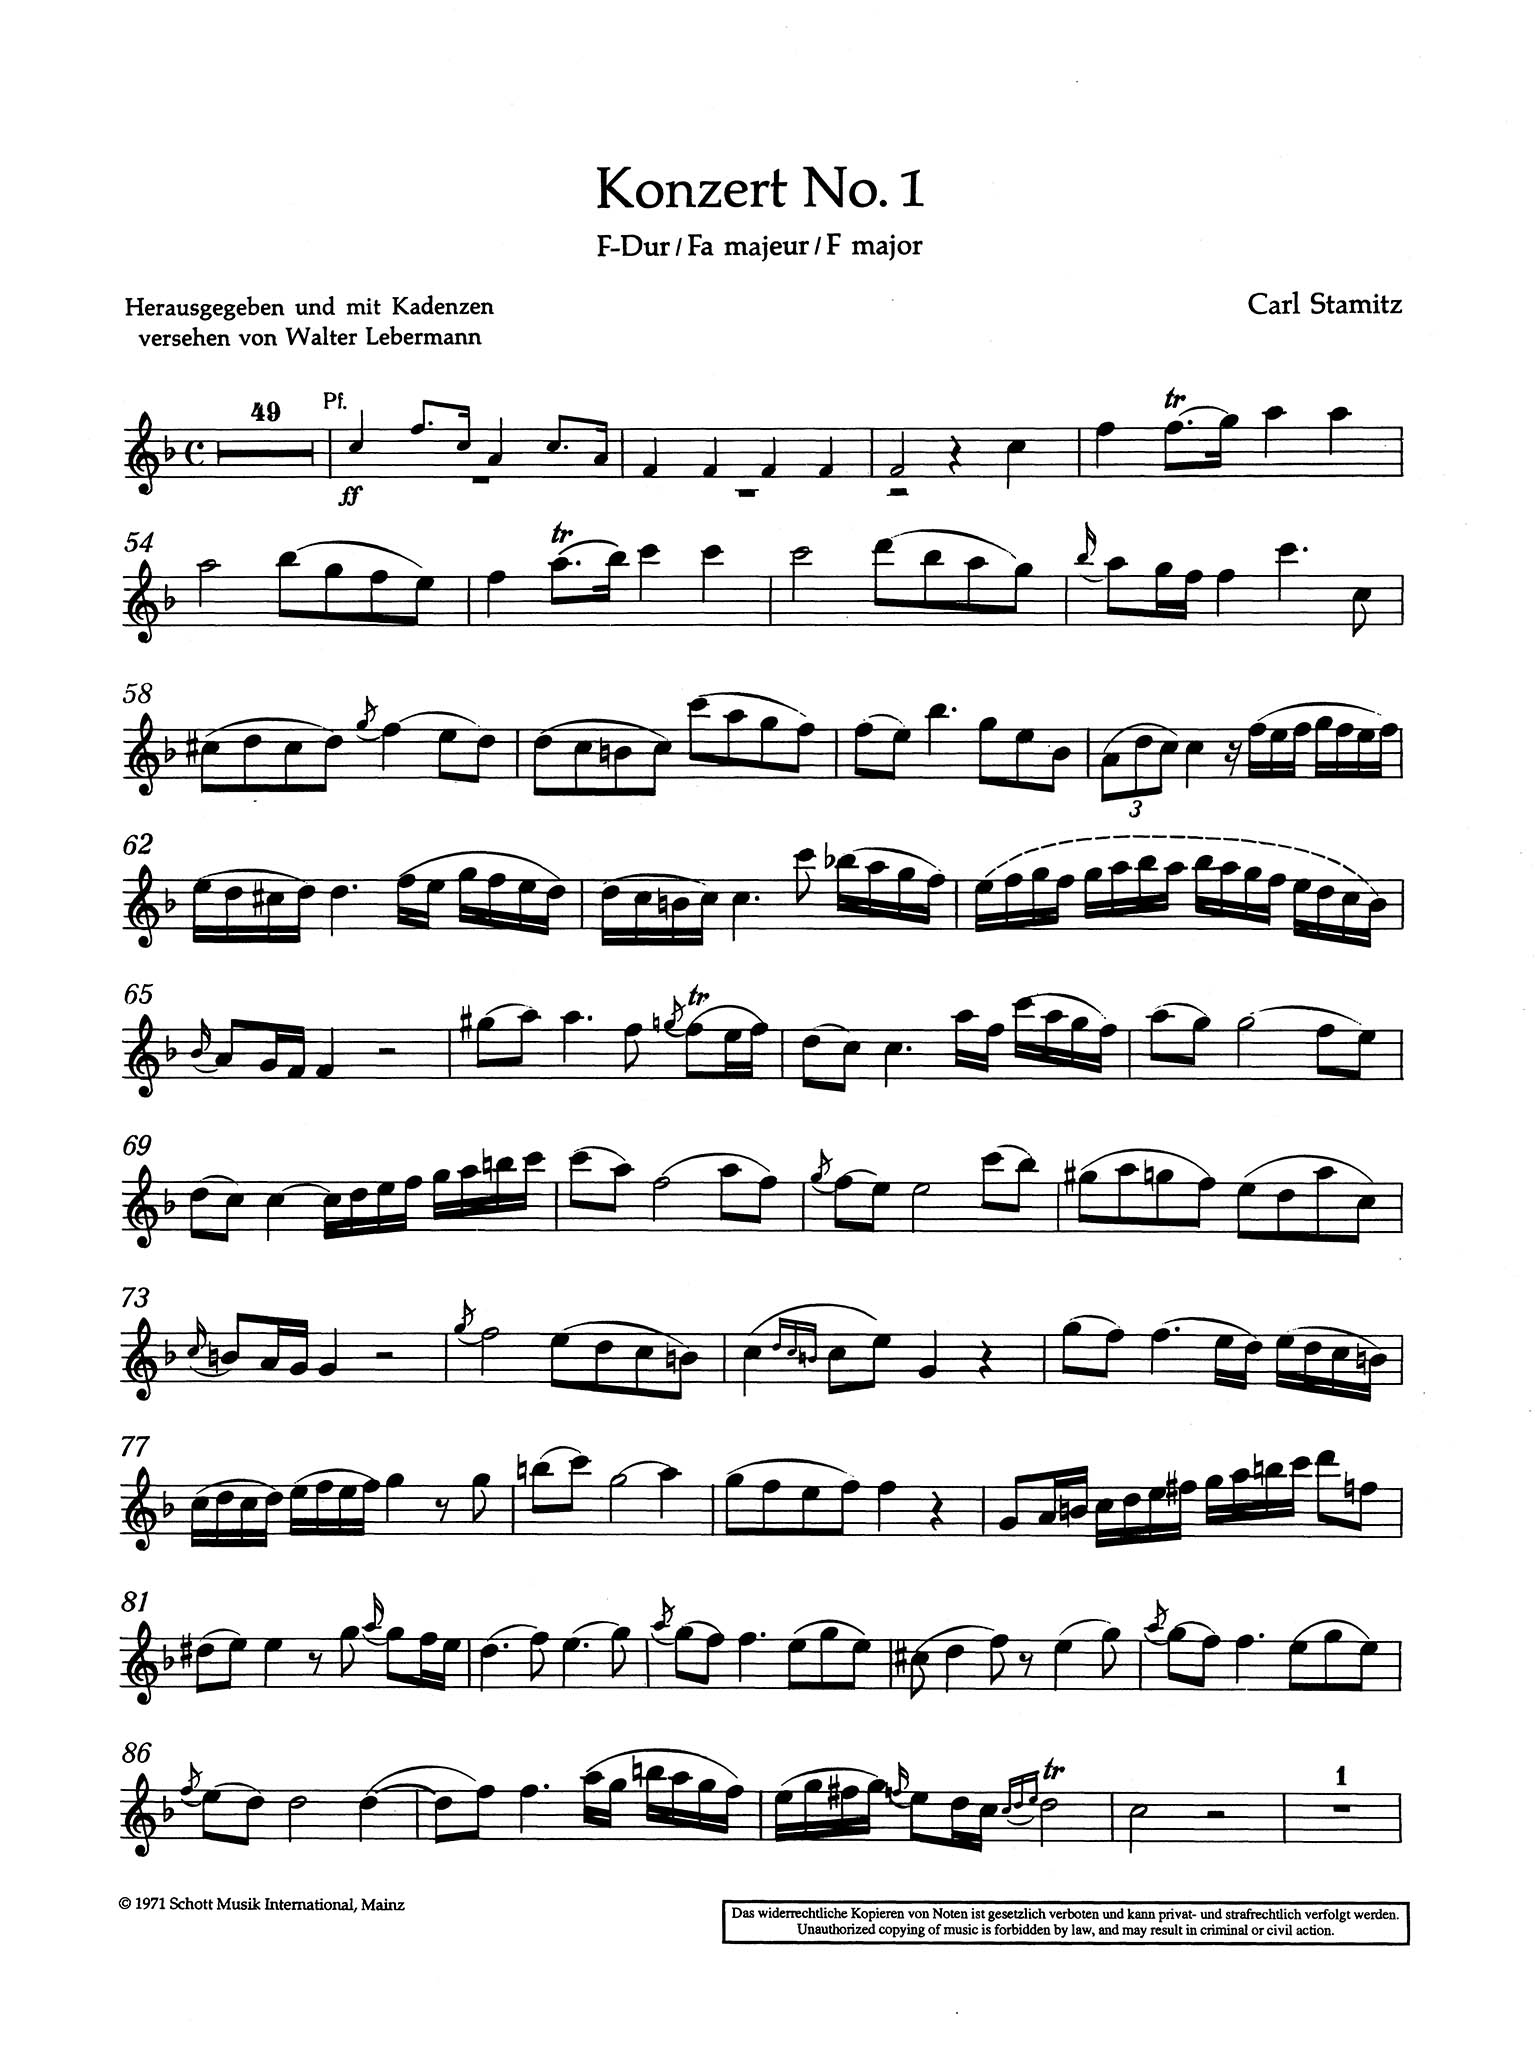 Clarinet Concerto No. 1 (Kaiser) in F Major C Clarinet part